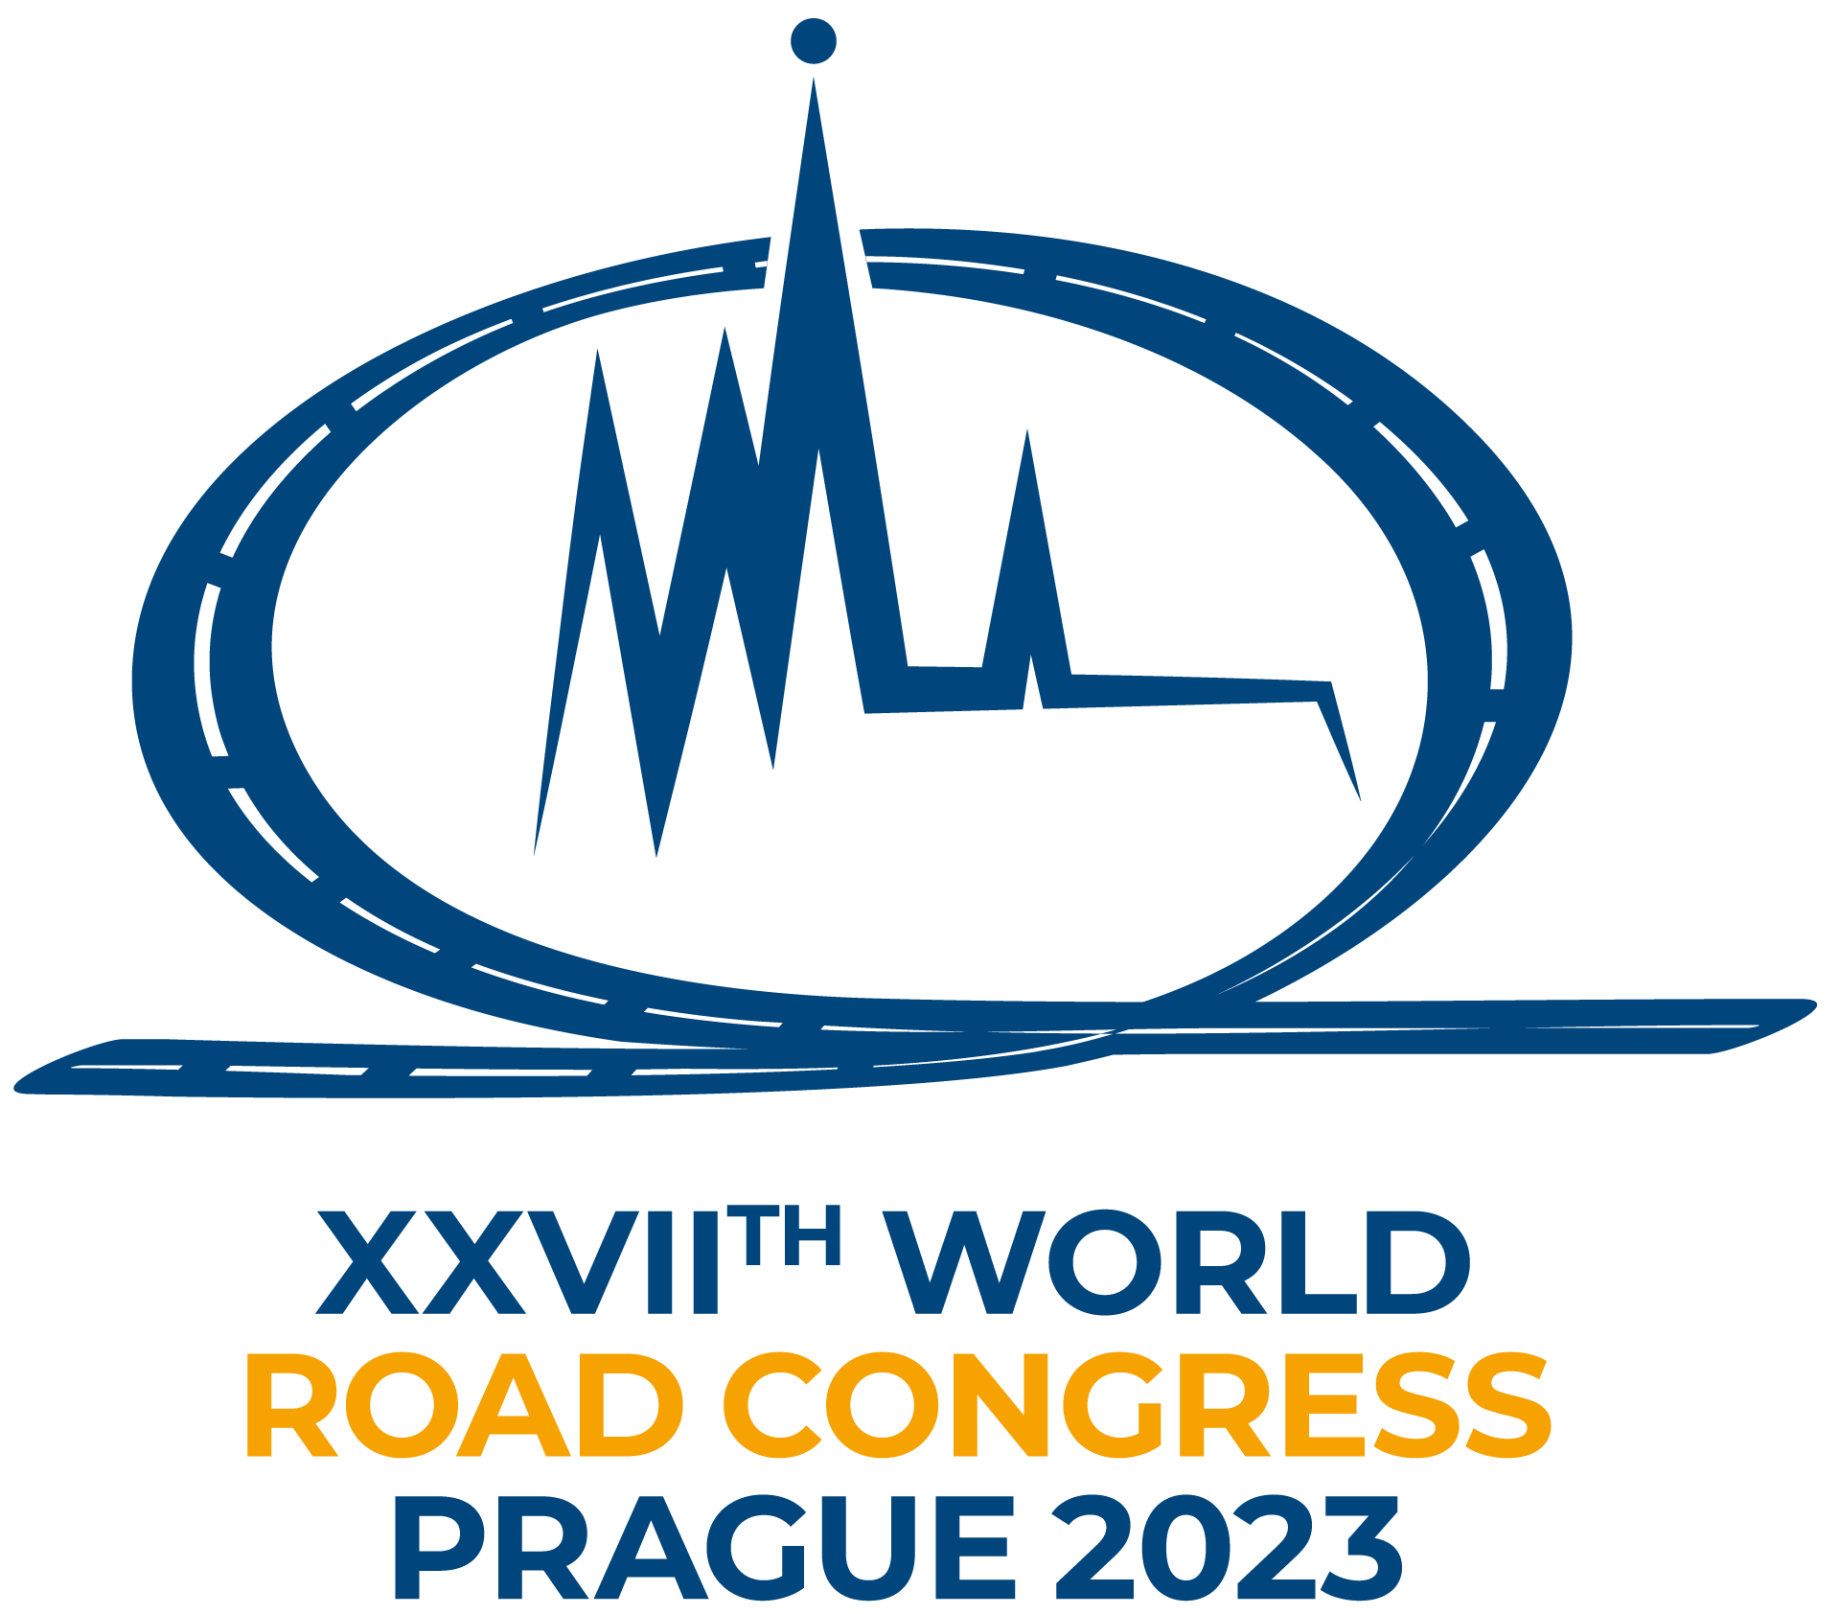 Official Website of the XXVII World Road Congress Prague 2023 - PIARC (World Road Association)